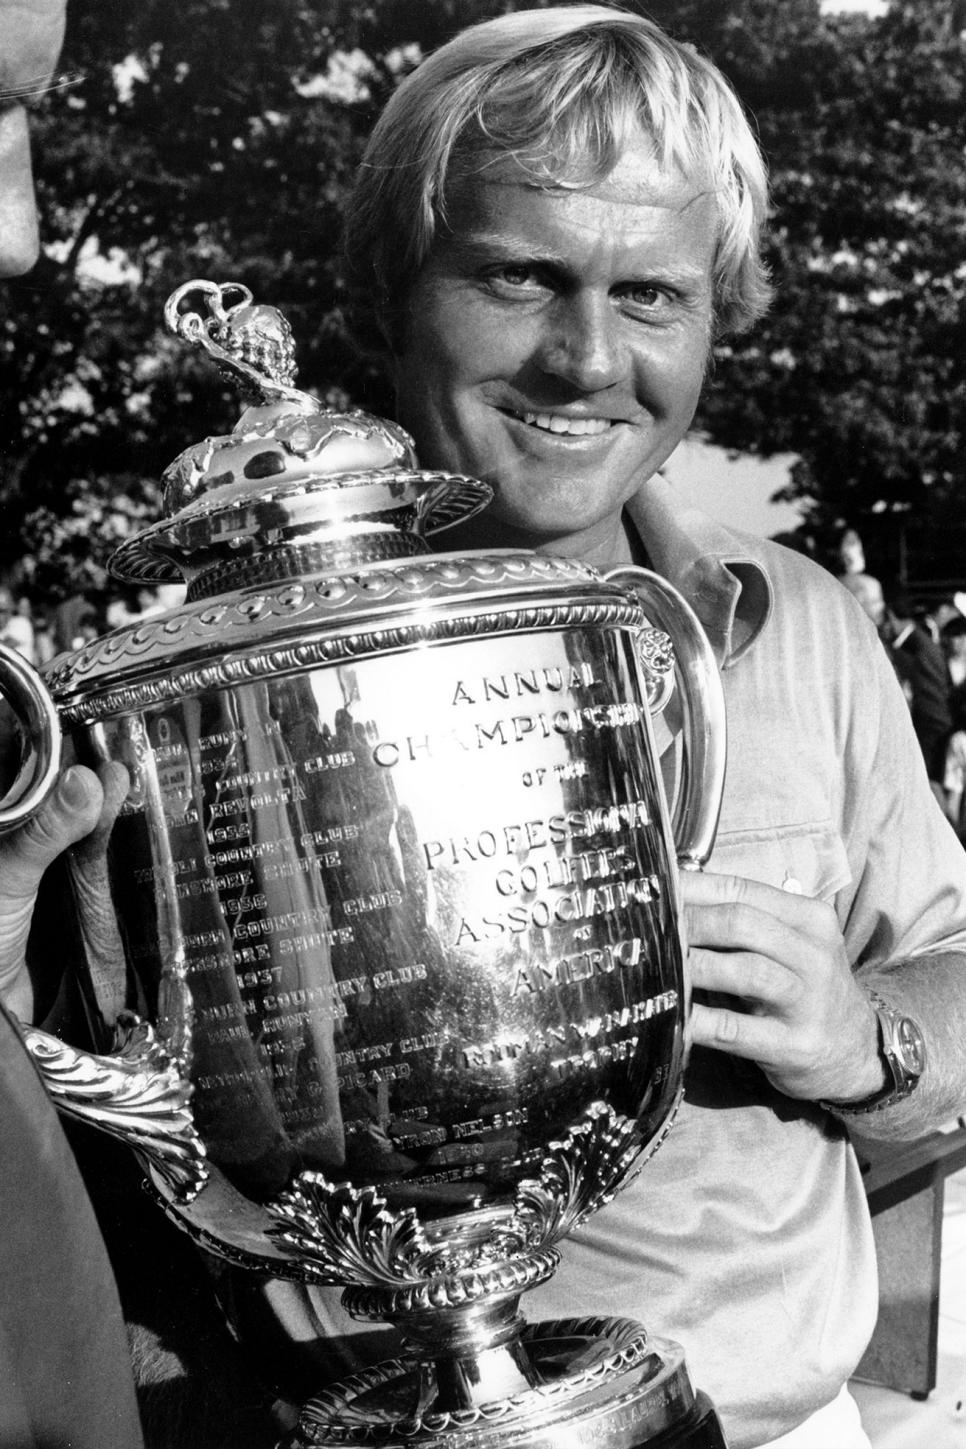 jack-nicklaus-1973-PGA-Championship-trophy.jpg